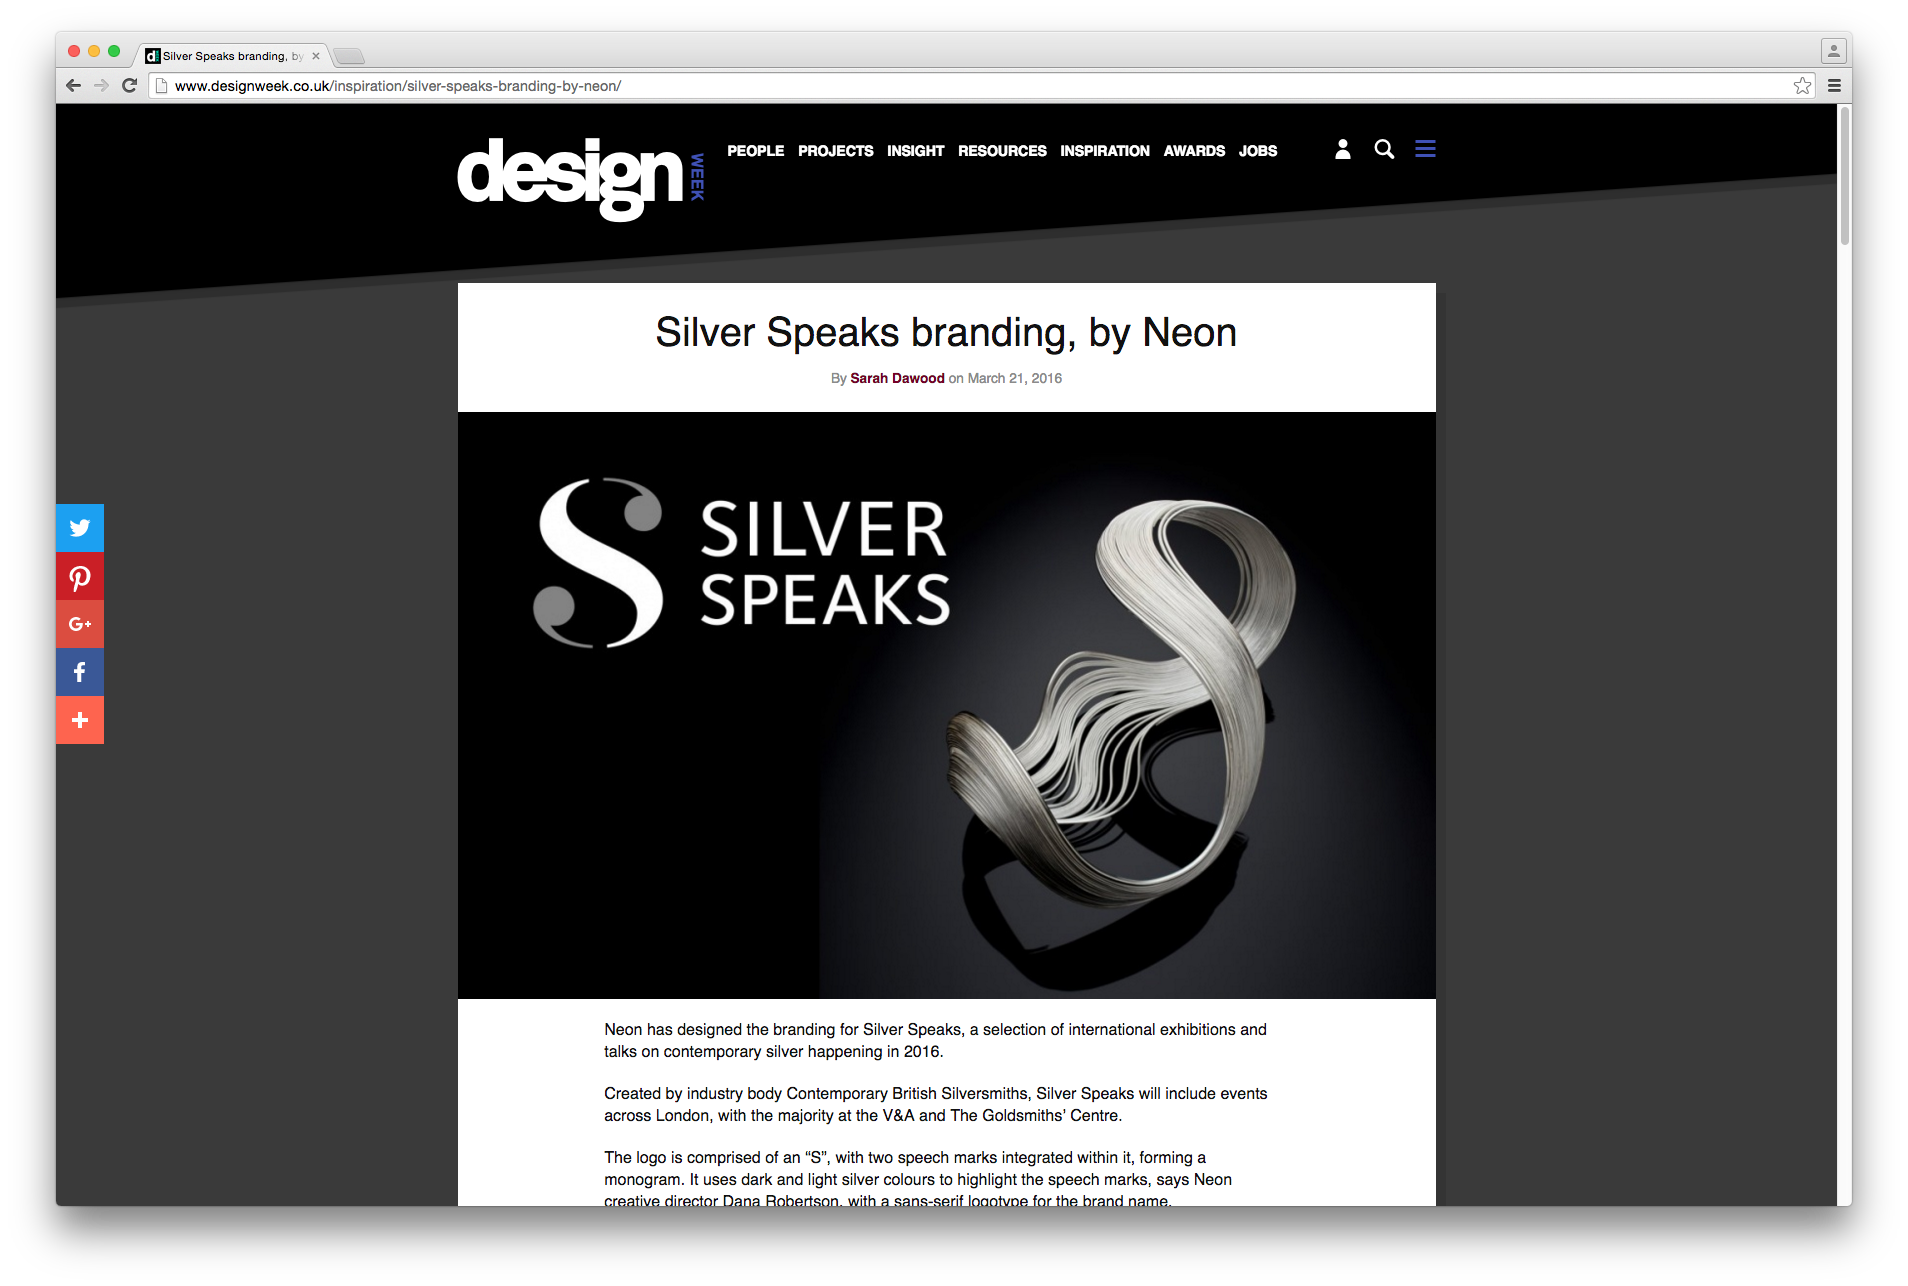 Branding by Neon - designed by Dana Robertson - Silver Speaks exhibition - features in Design Week magazine